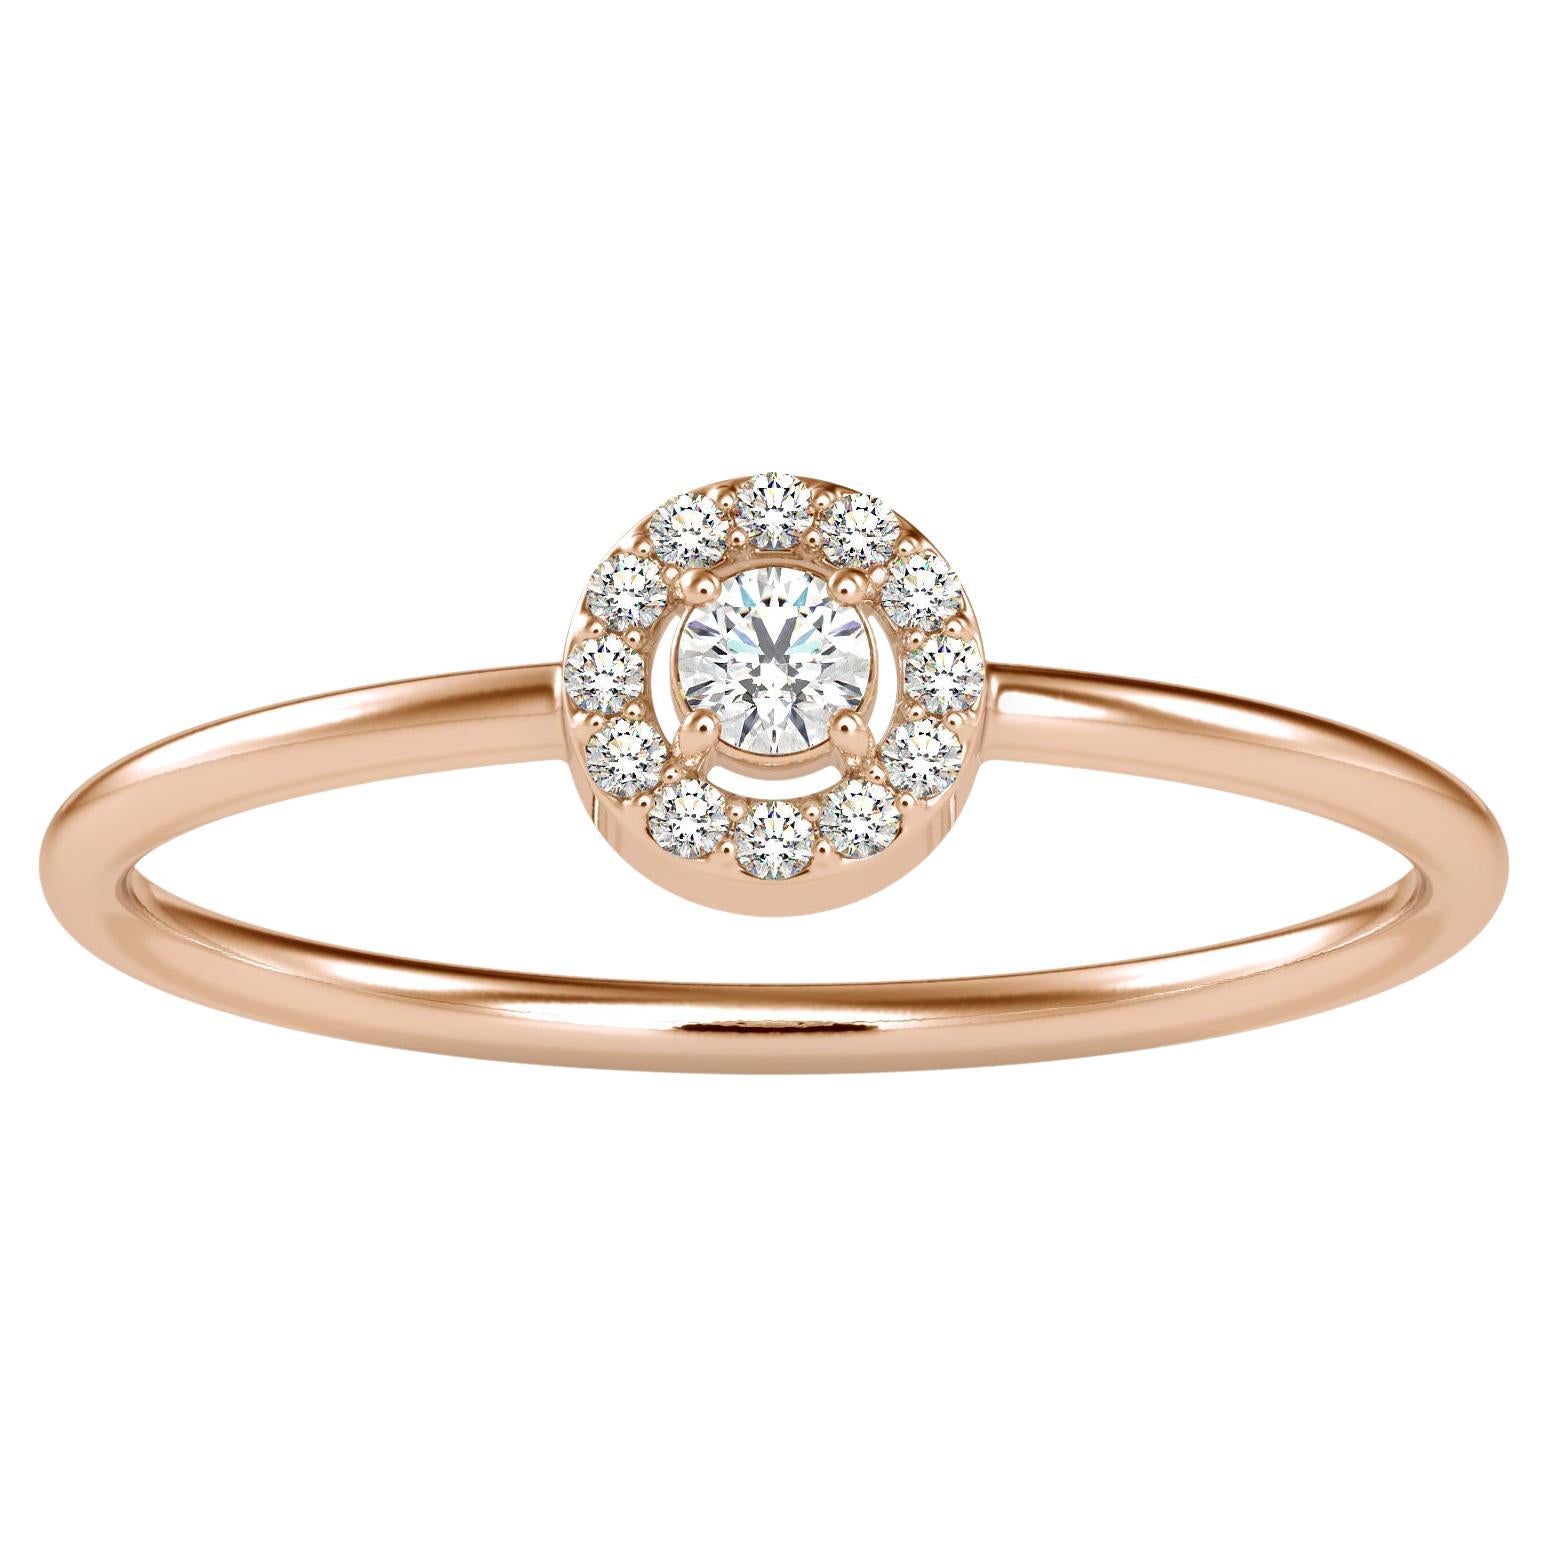 0,11 Karat Diamant 14K Roségold Ring